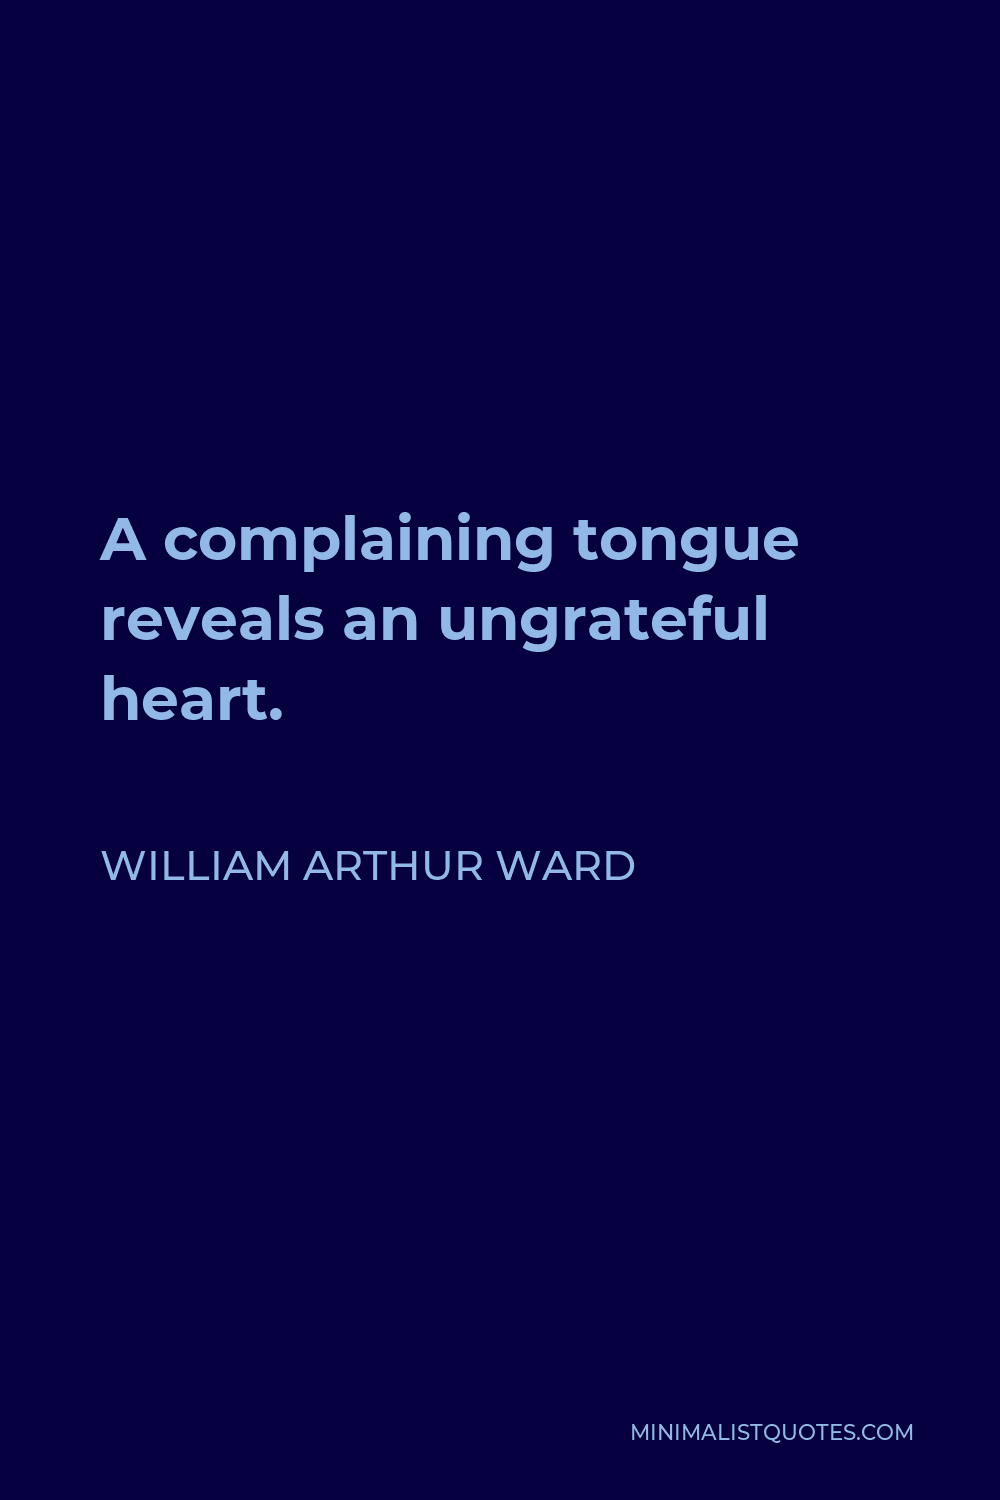 William Arthur Ward Quote - A complaining tongue reveals an ungrateful heart.